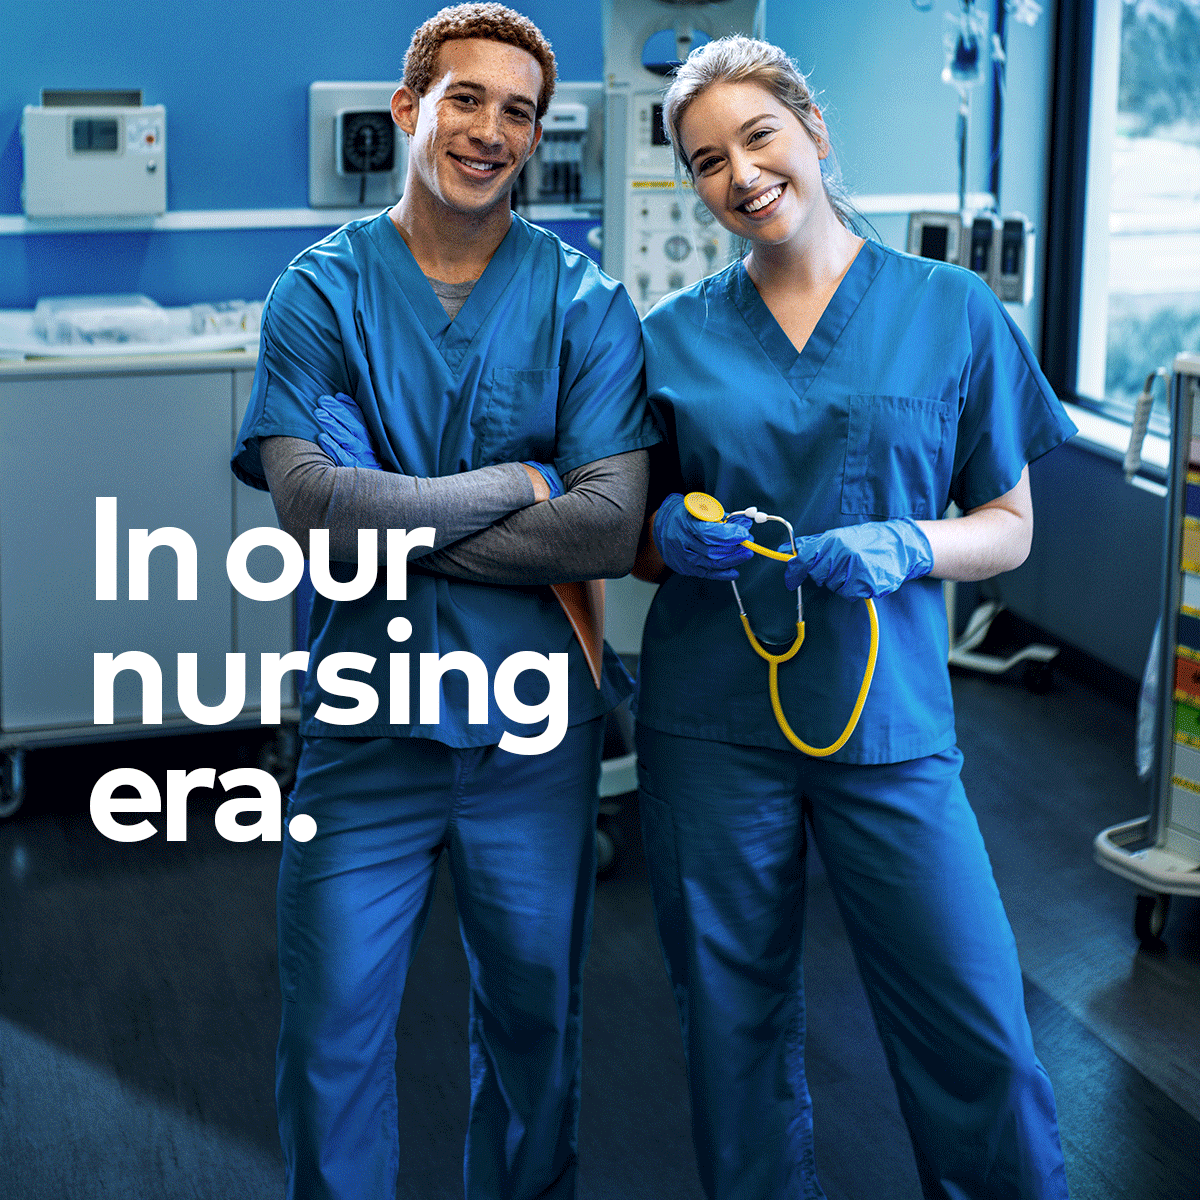 At HCA Midwest Health, your nursing era awaits. Wherever you are in your nursing journey, we’ll meet you there. Explore our careers now at ShowUpForNurses.com #nursingjobs #nursingera #nursing #hcamidwest #redera #kansascity